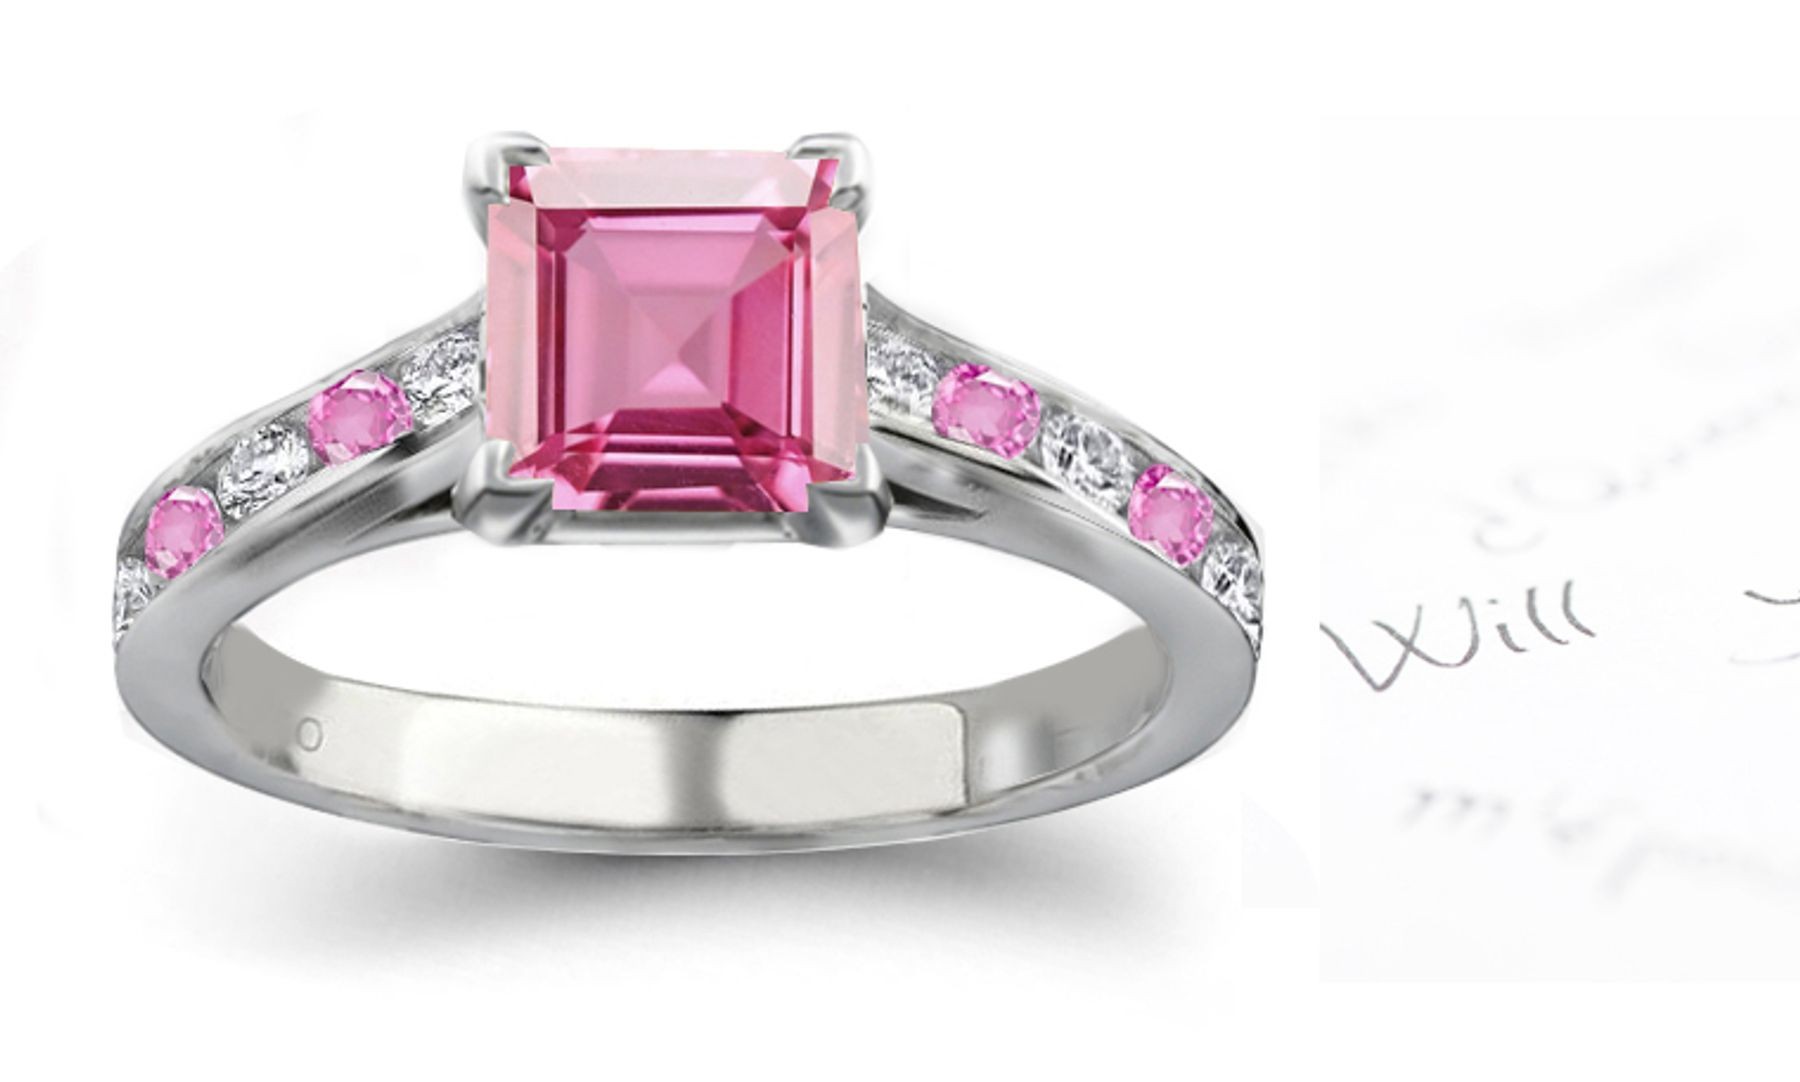 Mediterranean Sea Gallery: Princess Cut Ladies Pink Sapphire & Diamond Ring